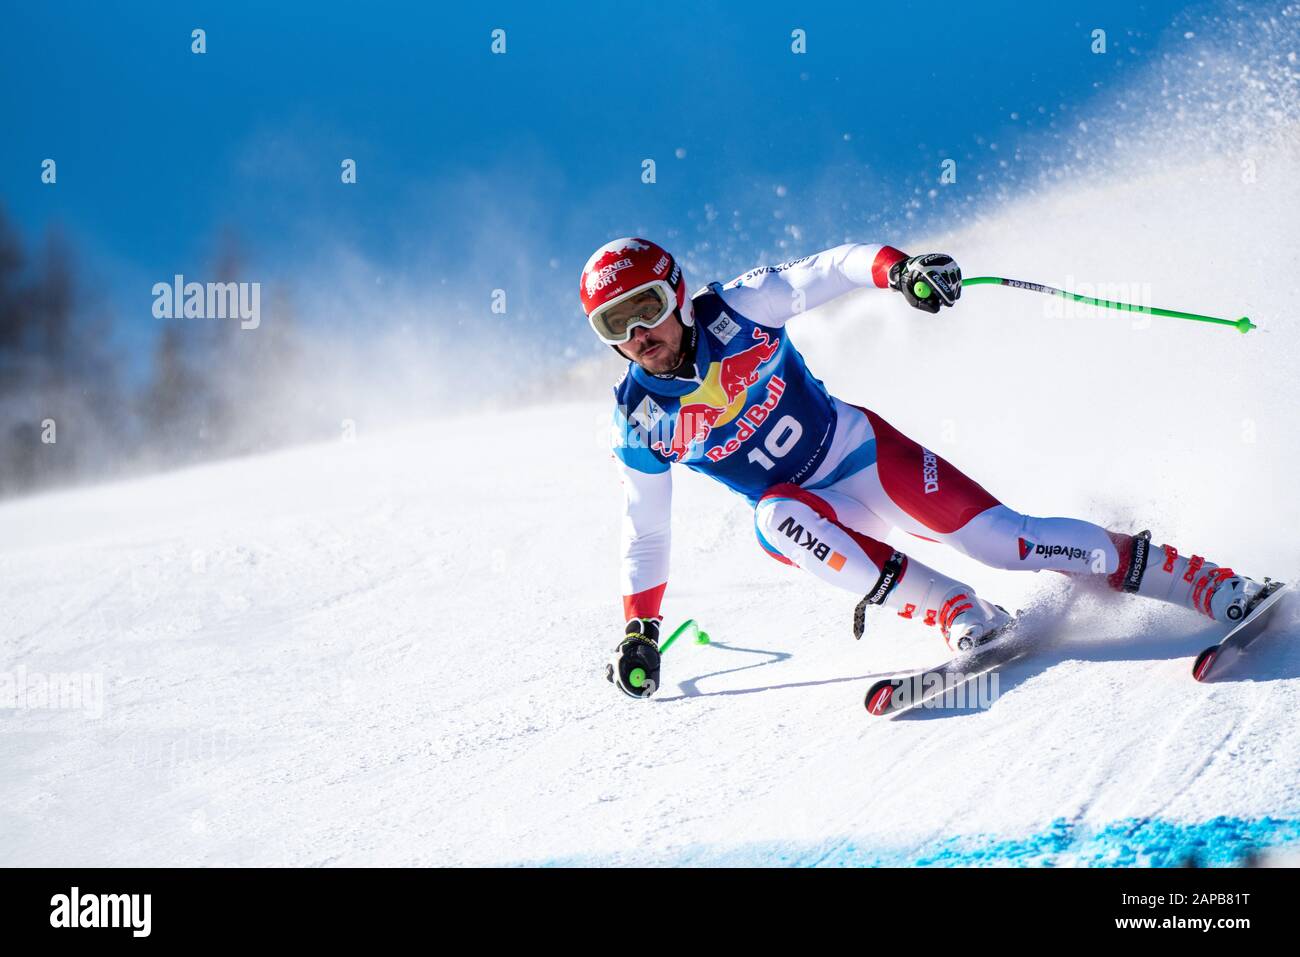 Carlo Janka of Switzerland at the Ski Alpin: 80. Hahnenkamm Race 2020 - Audi FIS Alpine Ski World Cup - Men's Downhill Training at the Streif on January 22, 2020 in Kitzbuehel, AUSTRIA. (Photo by Horst Ettensberger/ESPA-Images) Stock Photo